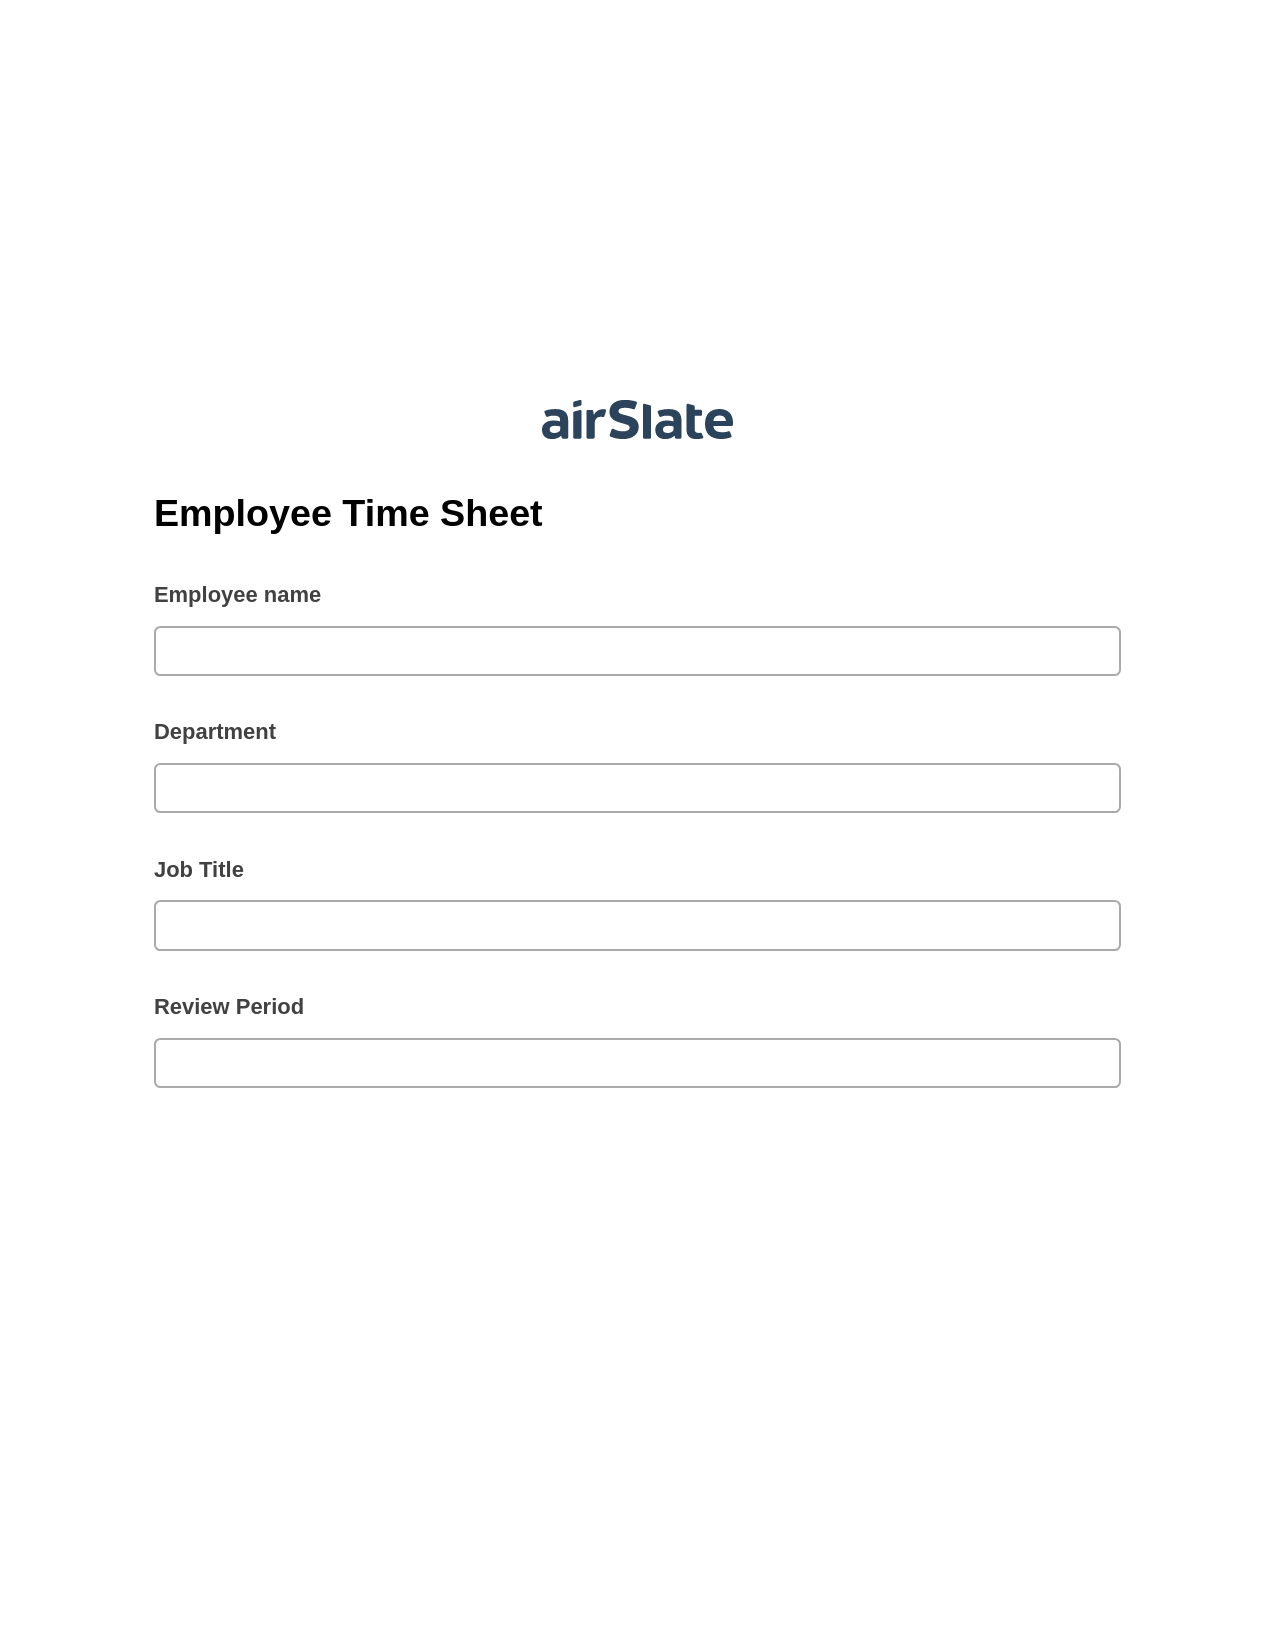 Multirole Employee Time Sheet Pre-fill from Google Sheets Bot, Update Audit Trail Bot, Post-finish Document Bot